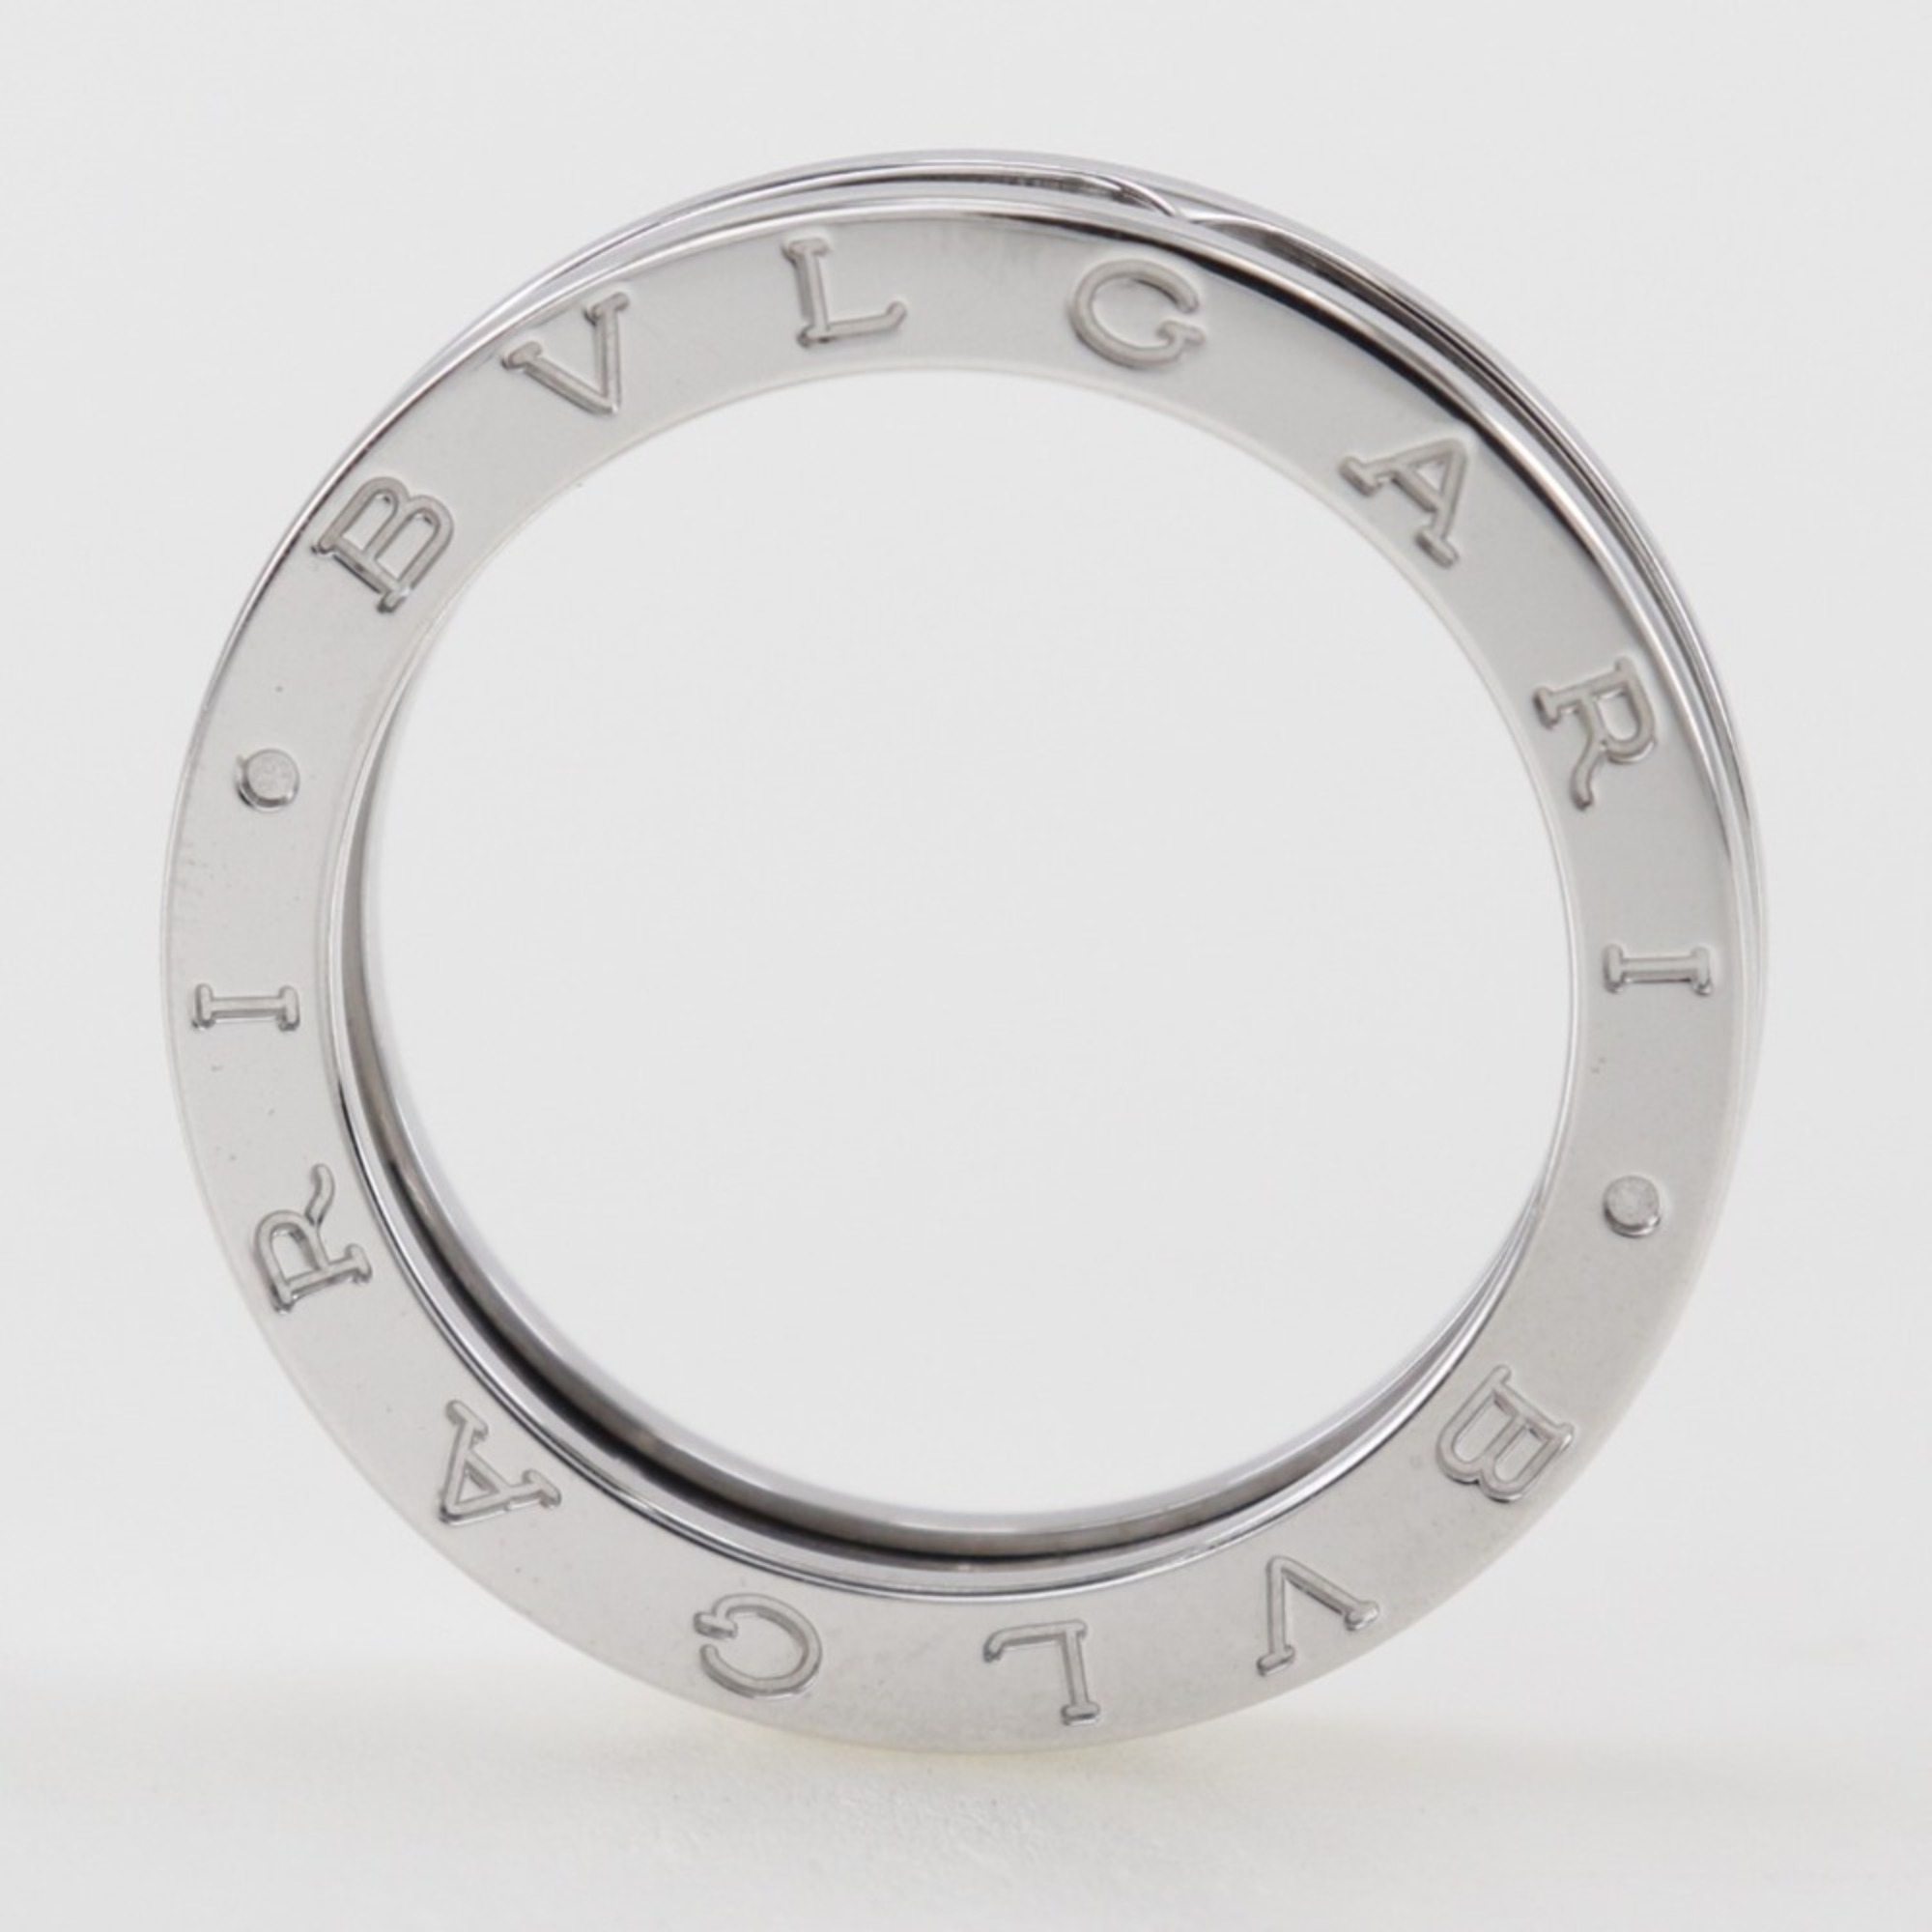 BVLGARI B-zero1 21.5 size ring, B-zero1, 18K white gold, approx. 8.6g, men's